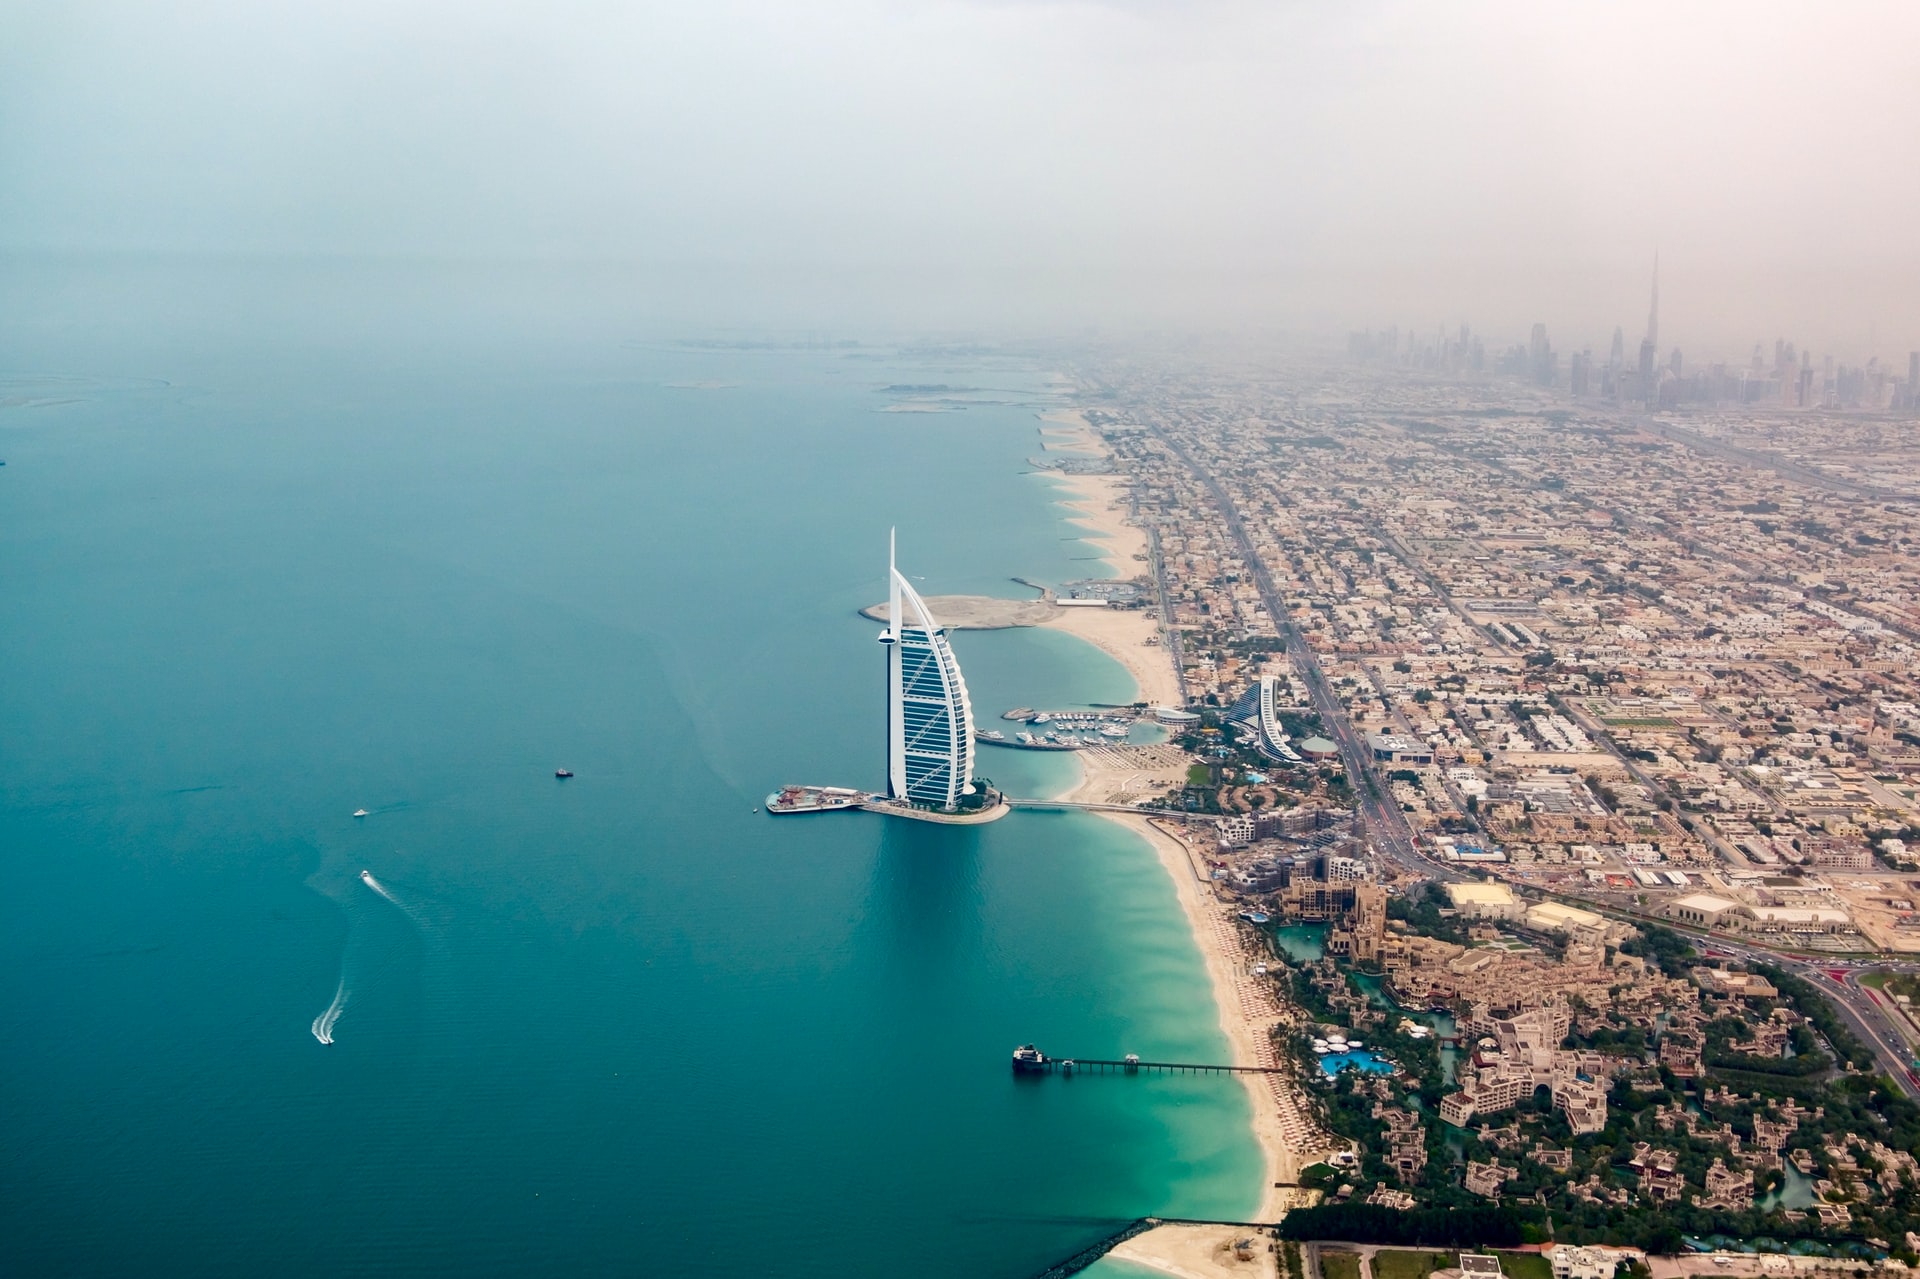 Aerial view of the coast of Dubai